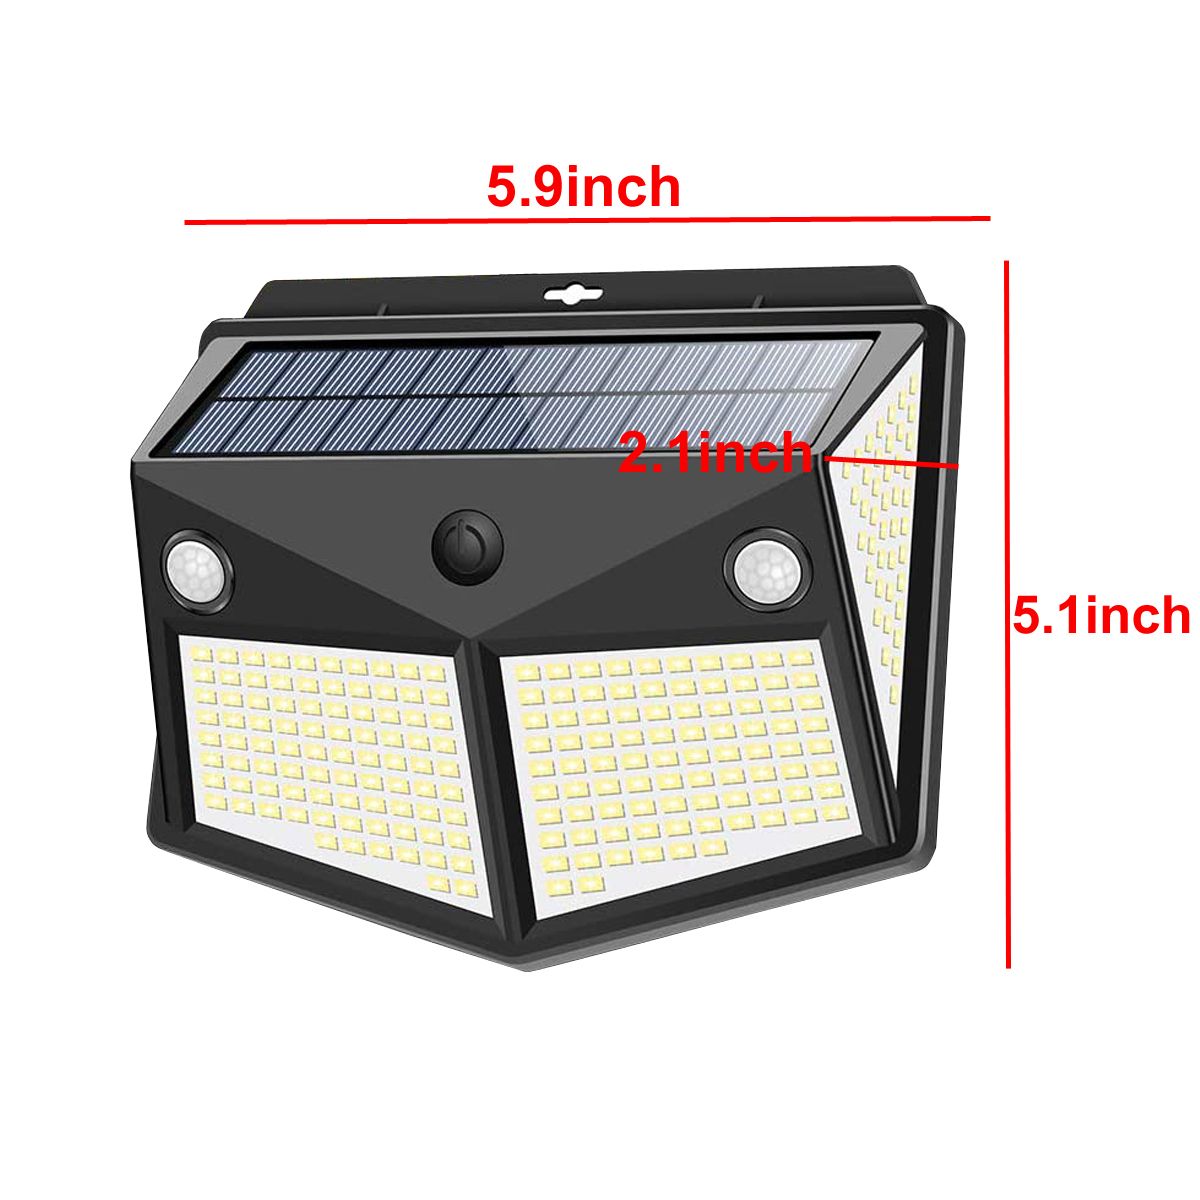 260-LED-Outdoor-Garden-Solar-Powered-Security-Wall-Light-PIR-Motion-Sensor-Lamp-1735188